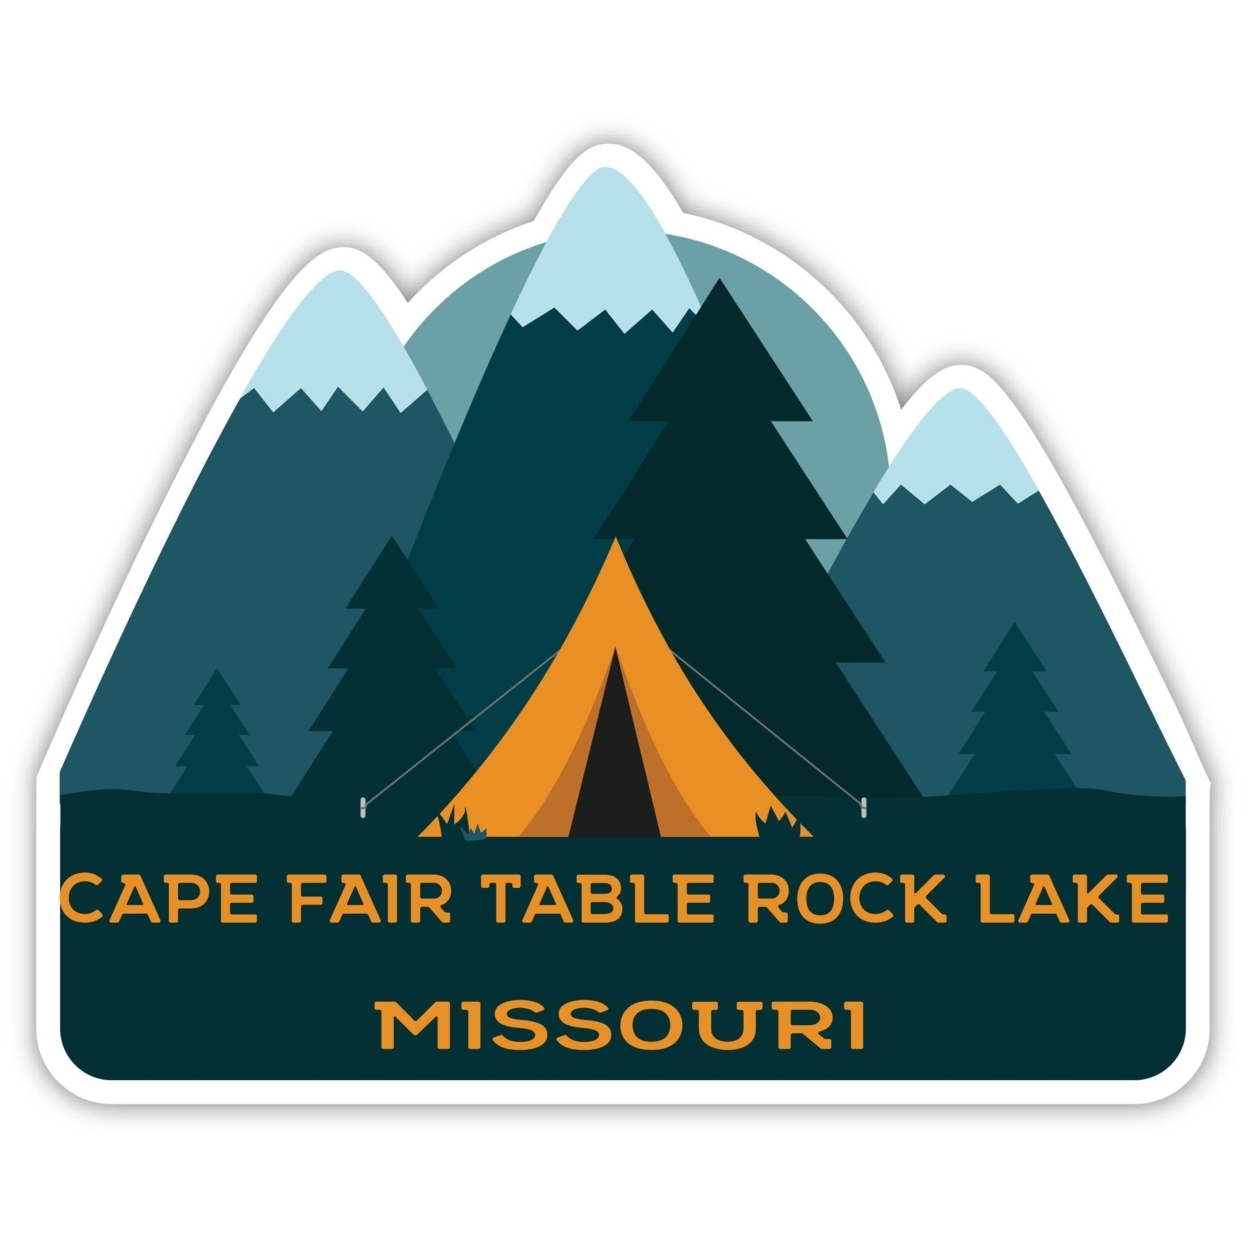 Cape Fair Table Rock Lake Missouri Souvenir Decorative Stickers (Choose Theme And Size) - 4-Pack, 12-Inch, Tent